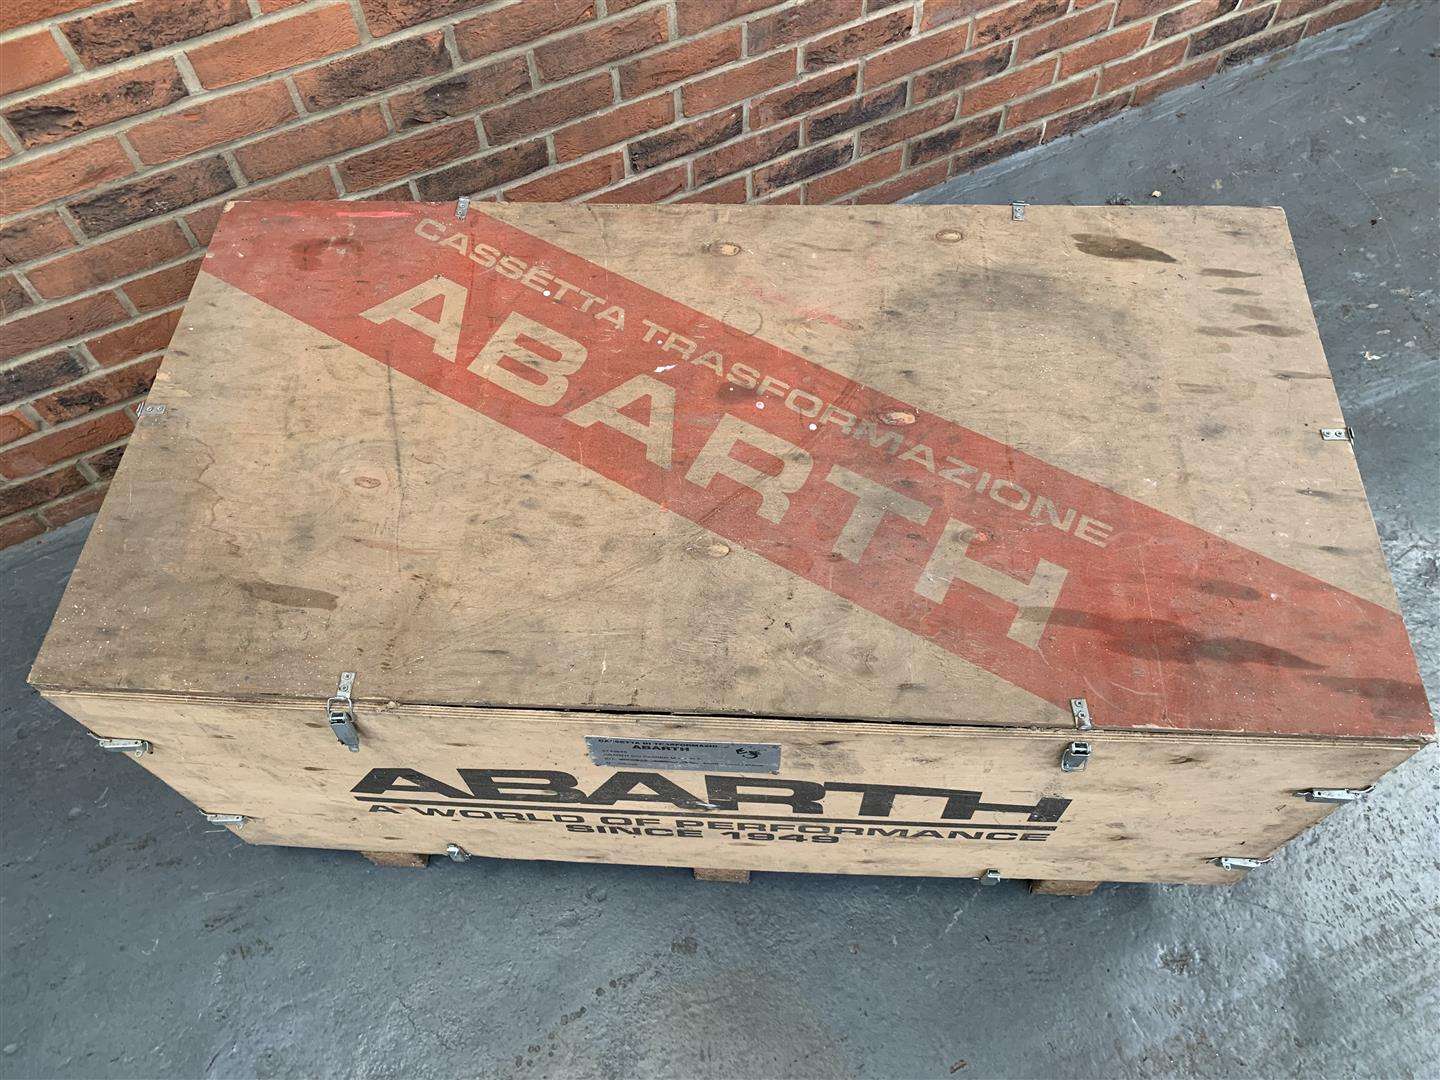 <p>Ex Goodwood Abarth transportation crate</p>